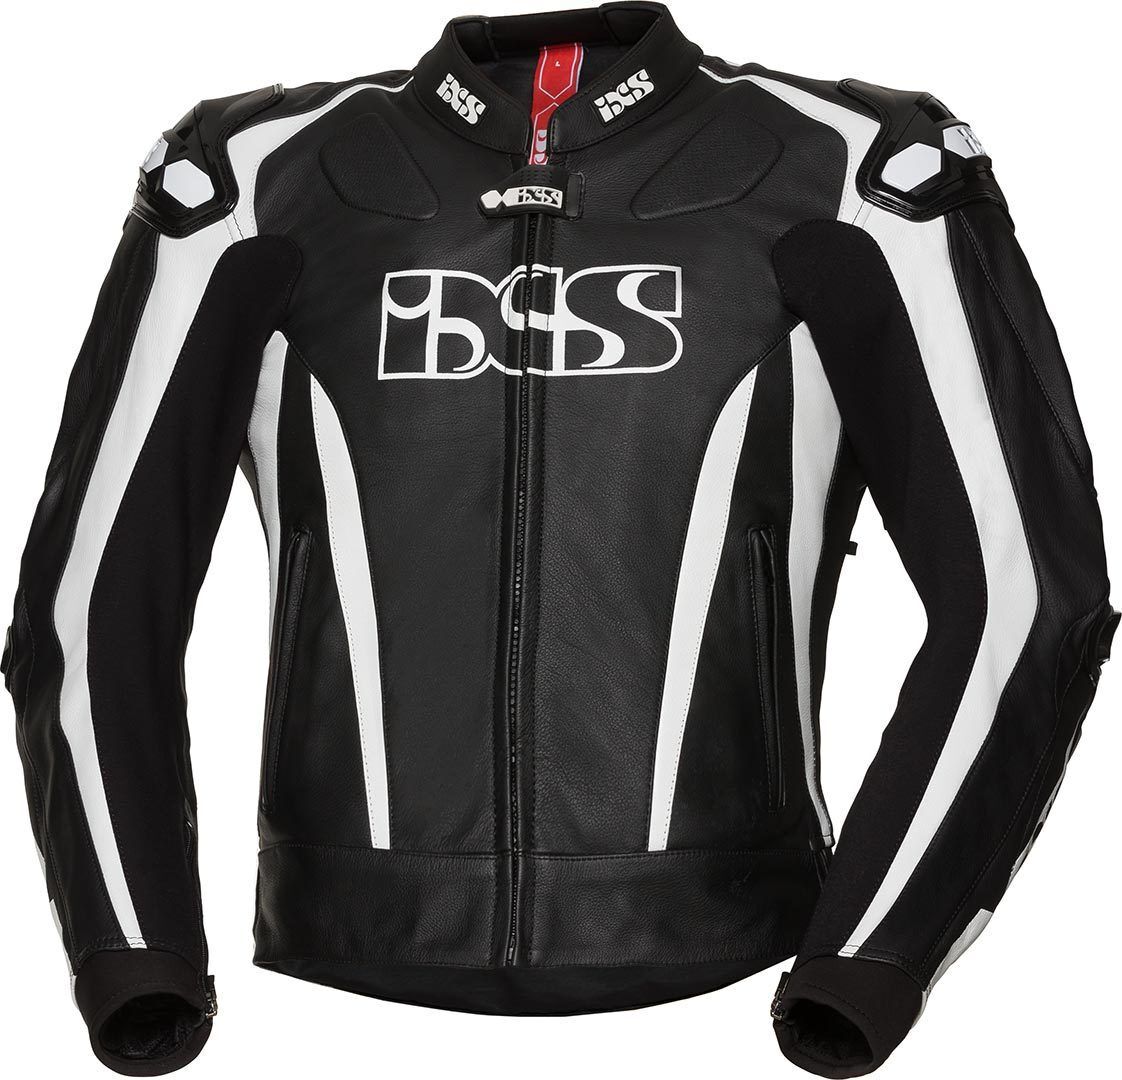 Ixs X-Sport Ld Rs-1000 Motorcycle Leather Jacket  - Black White